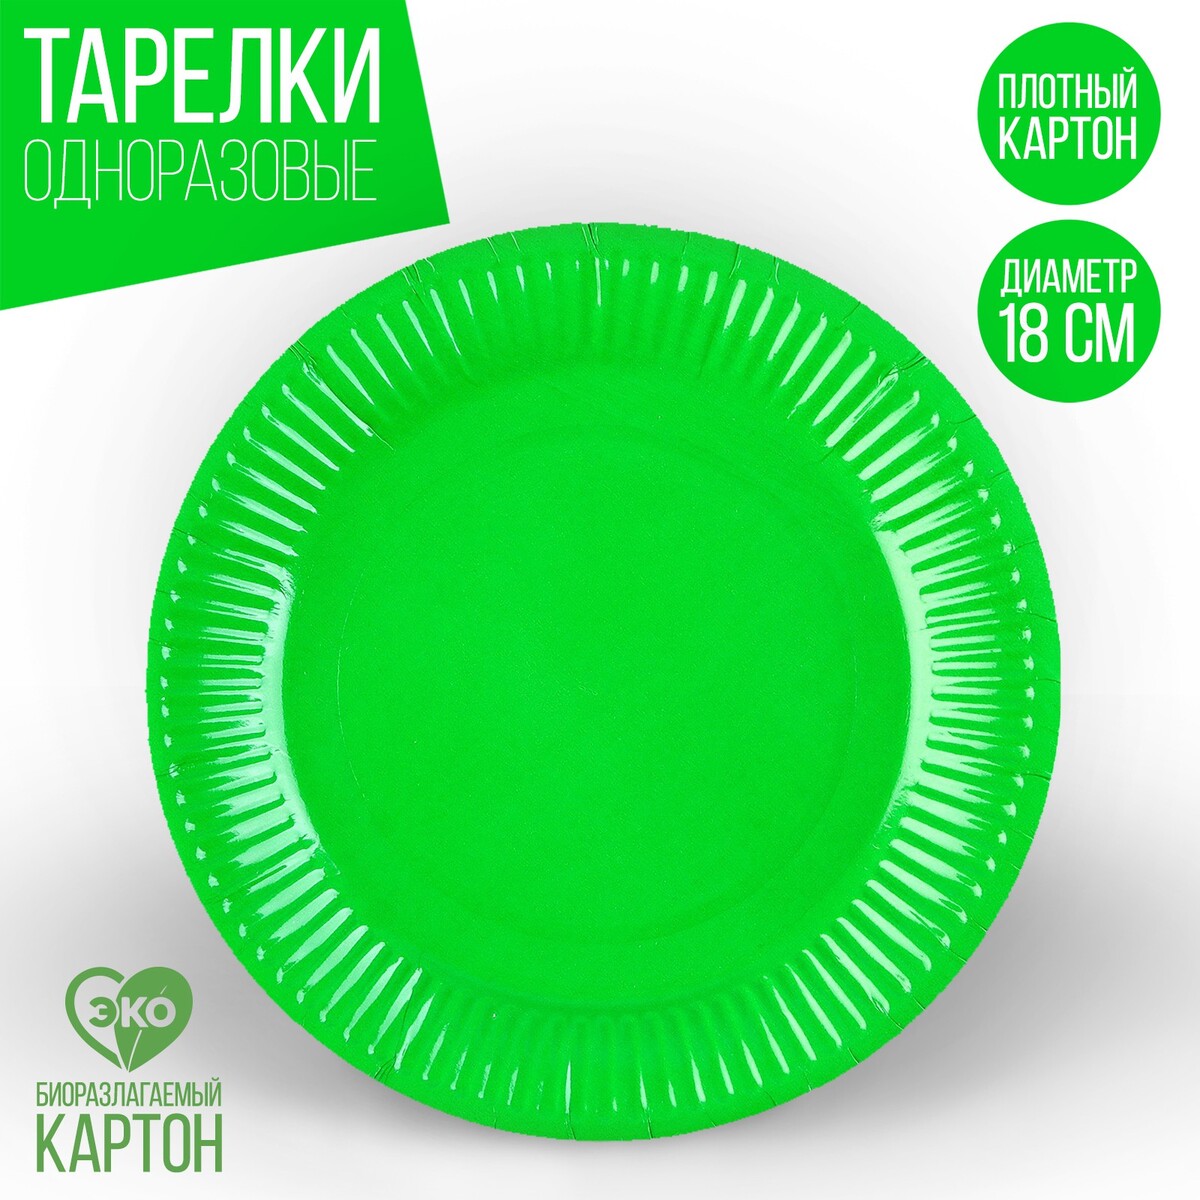 Тарелка одноразовая бумажная однотонная, зеленый цвет 18 см, набор 10 штук тарелка бумажная однотонная 18 см в наборе 10 шт желтый